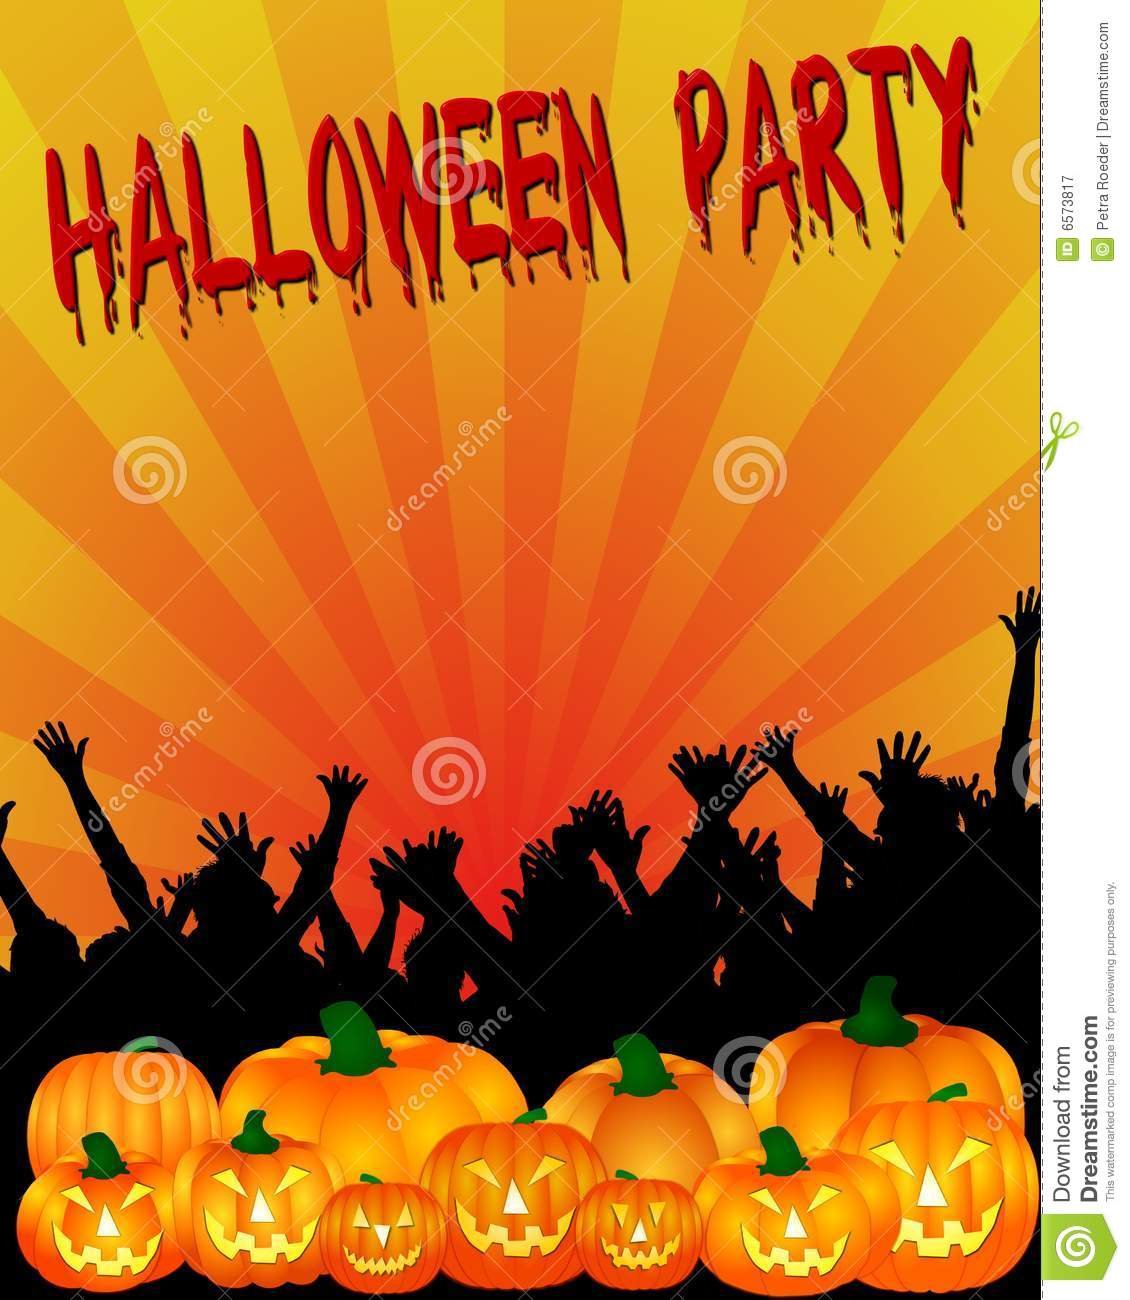 Halloween Party Invitation Royalty Free Stock Photography